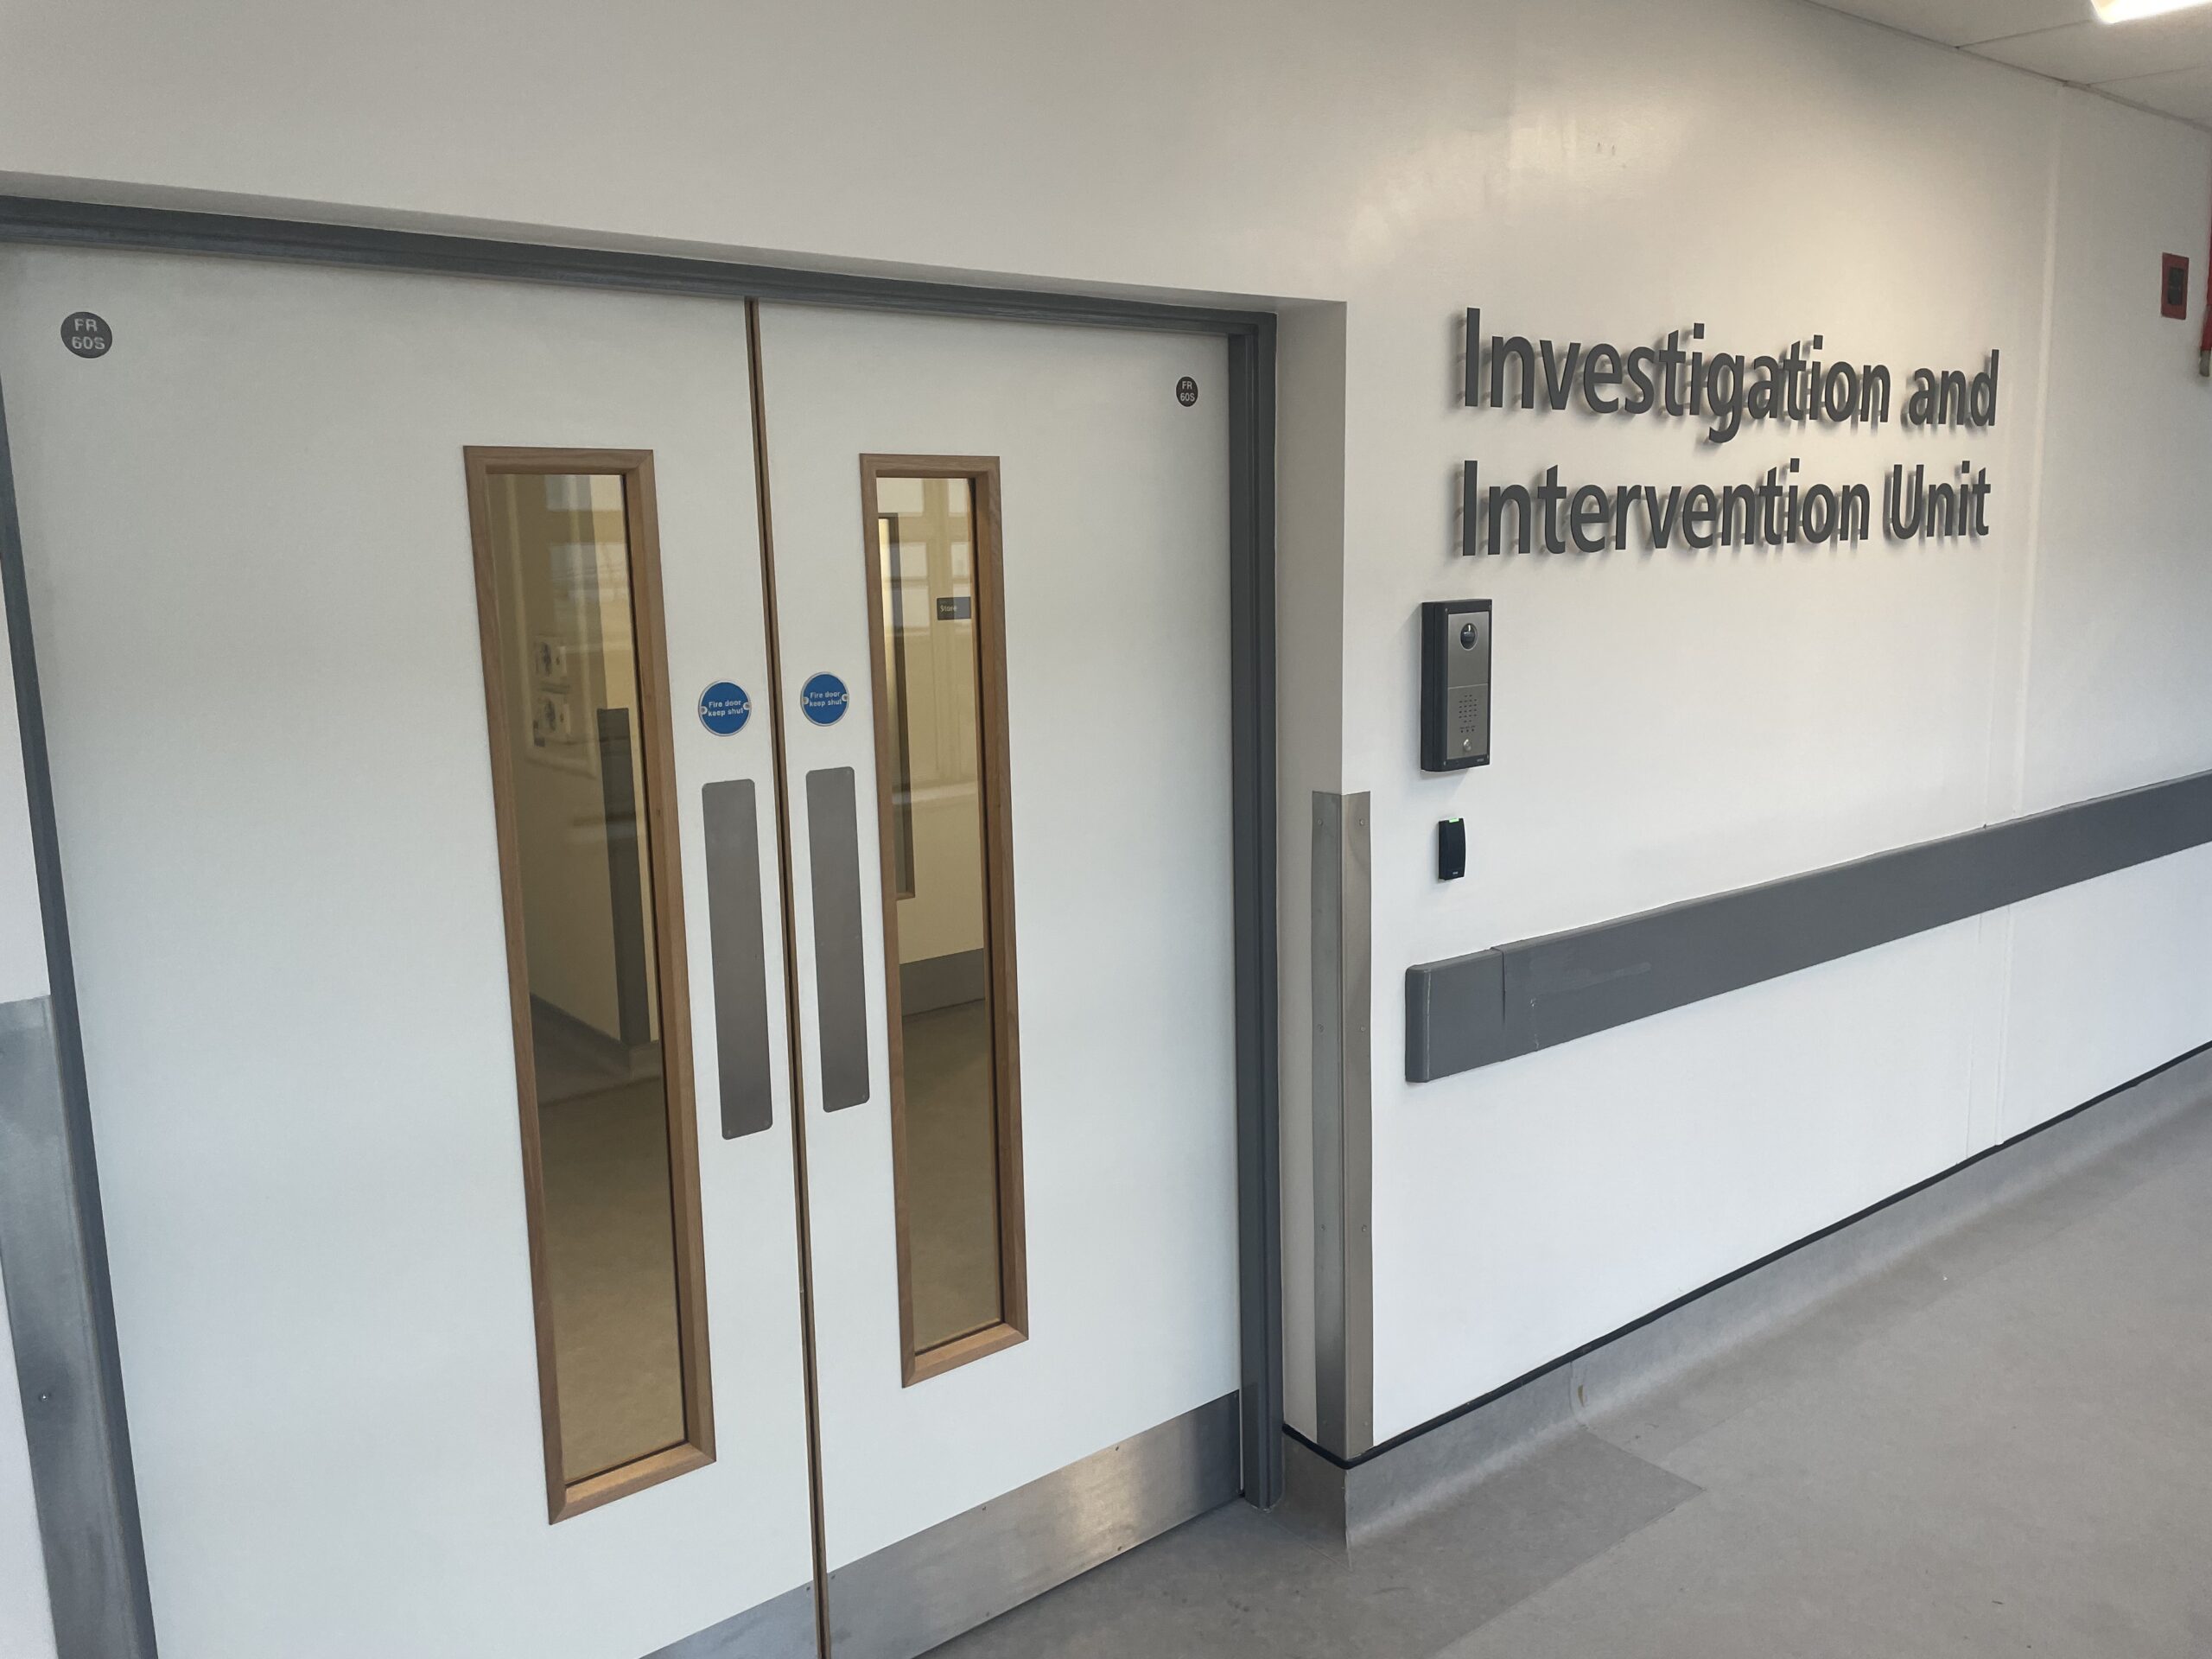 Sunderland Royal Hospital Investigation and Intervention Unit portfolio